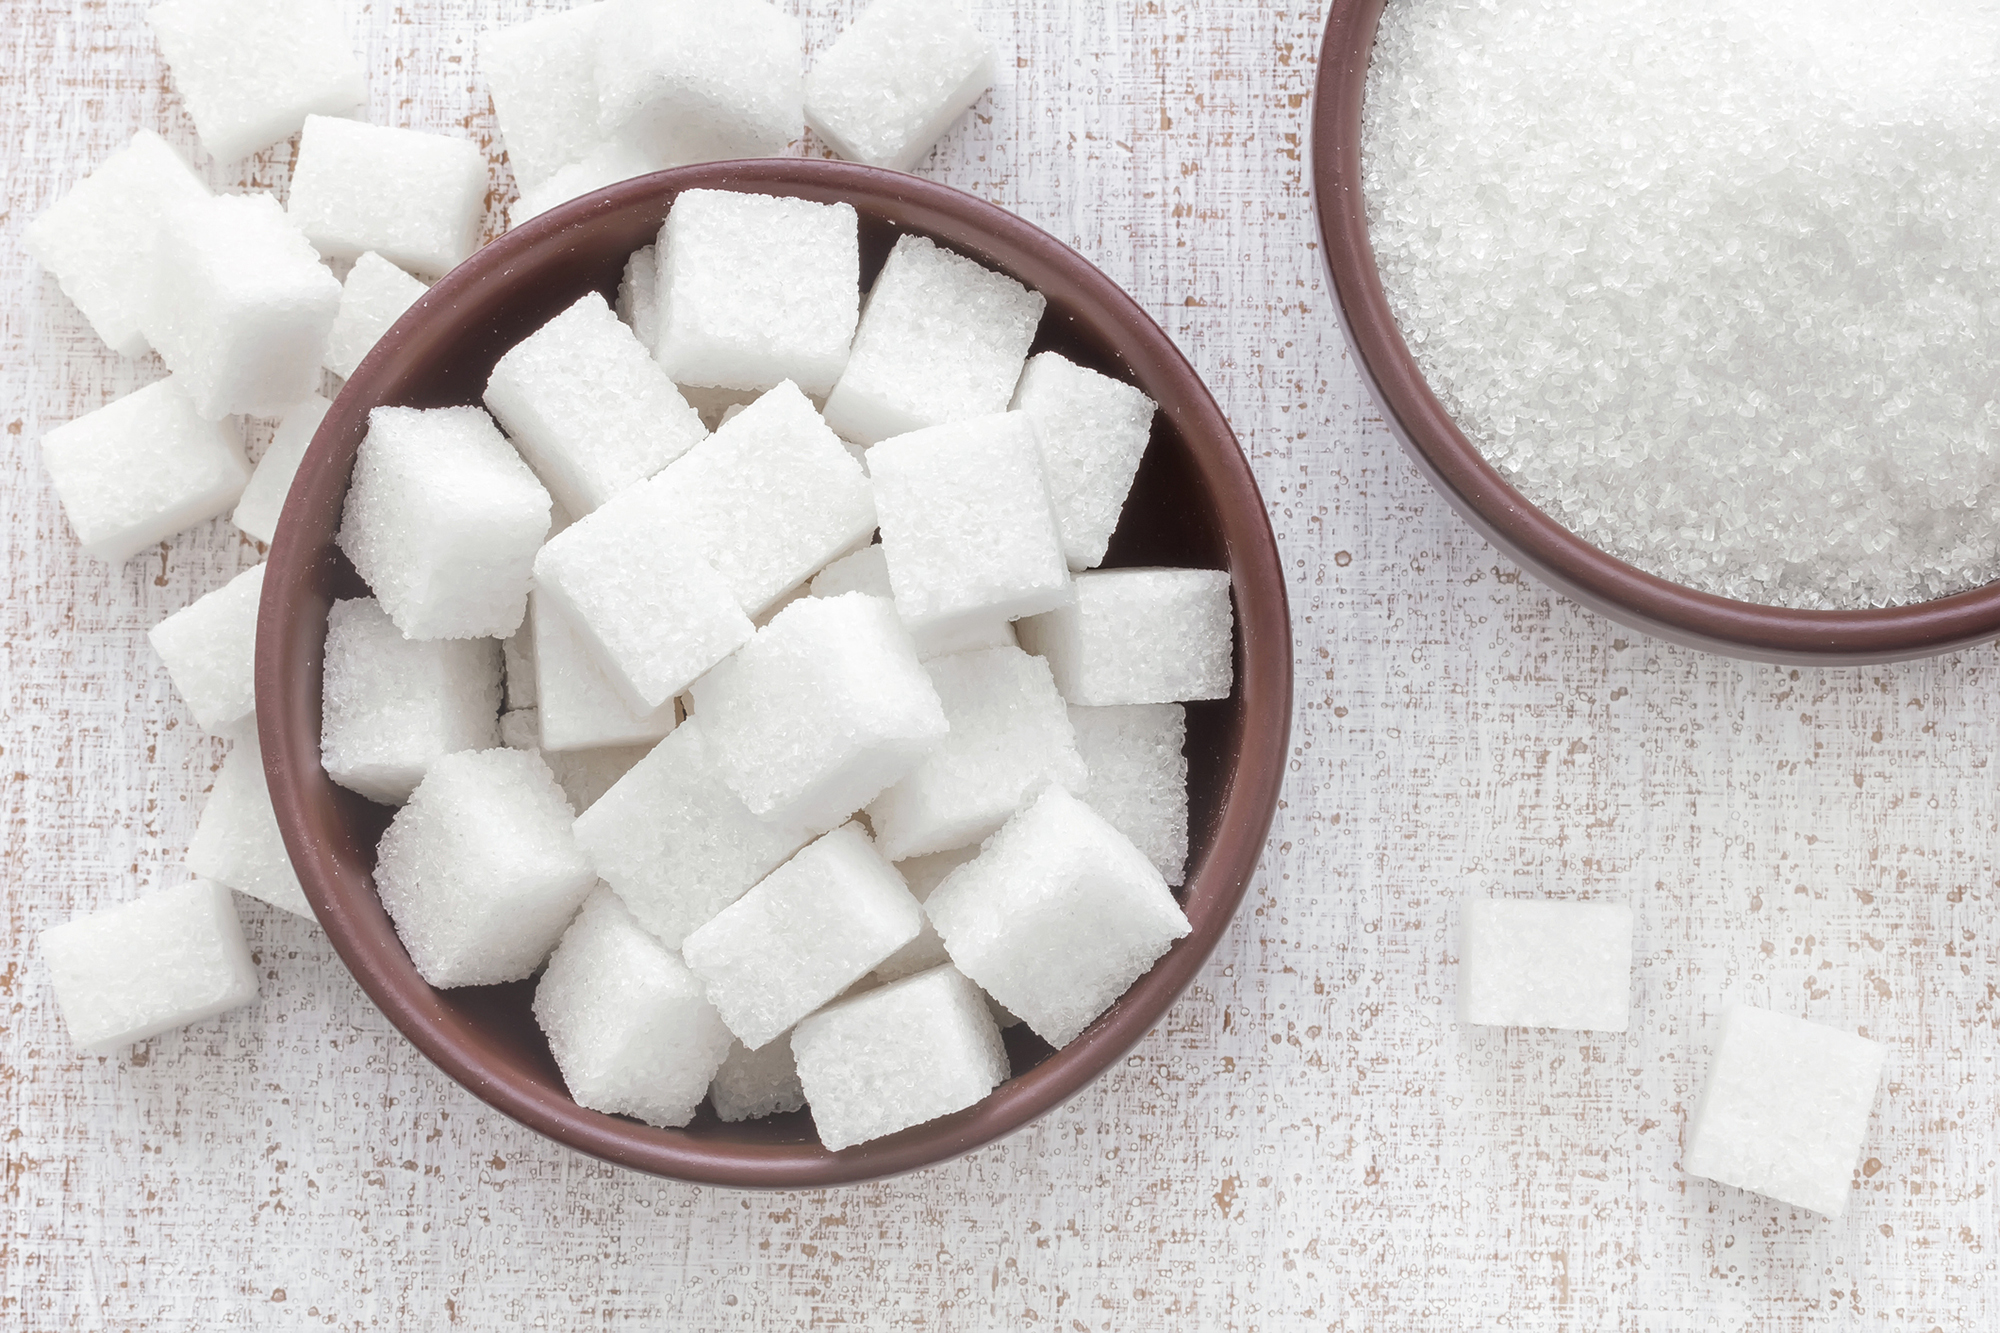 Sugar and your health - British Dietetic Association (BDA)